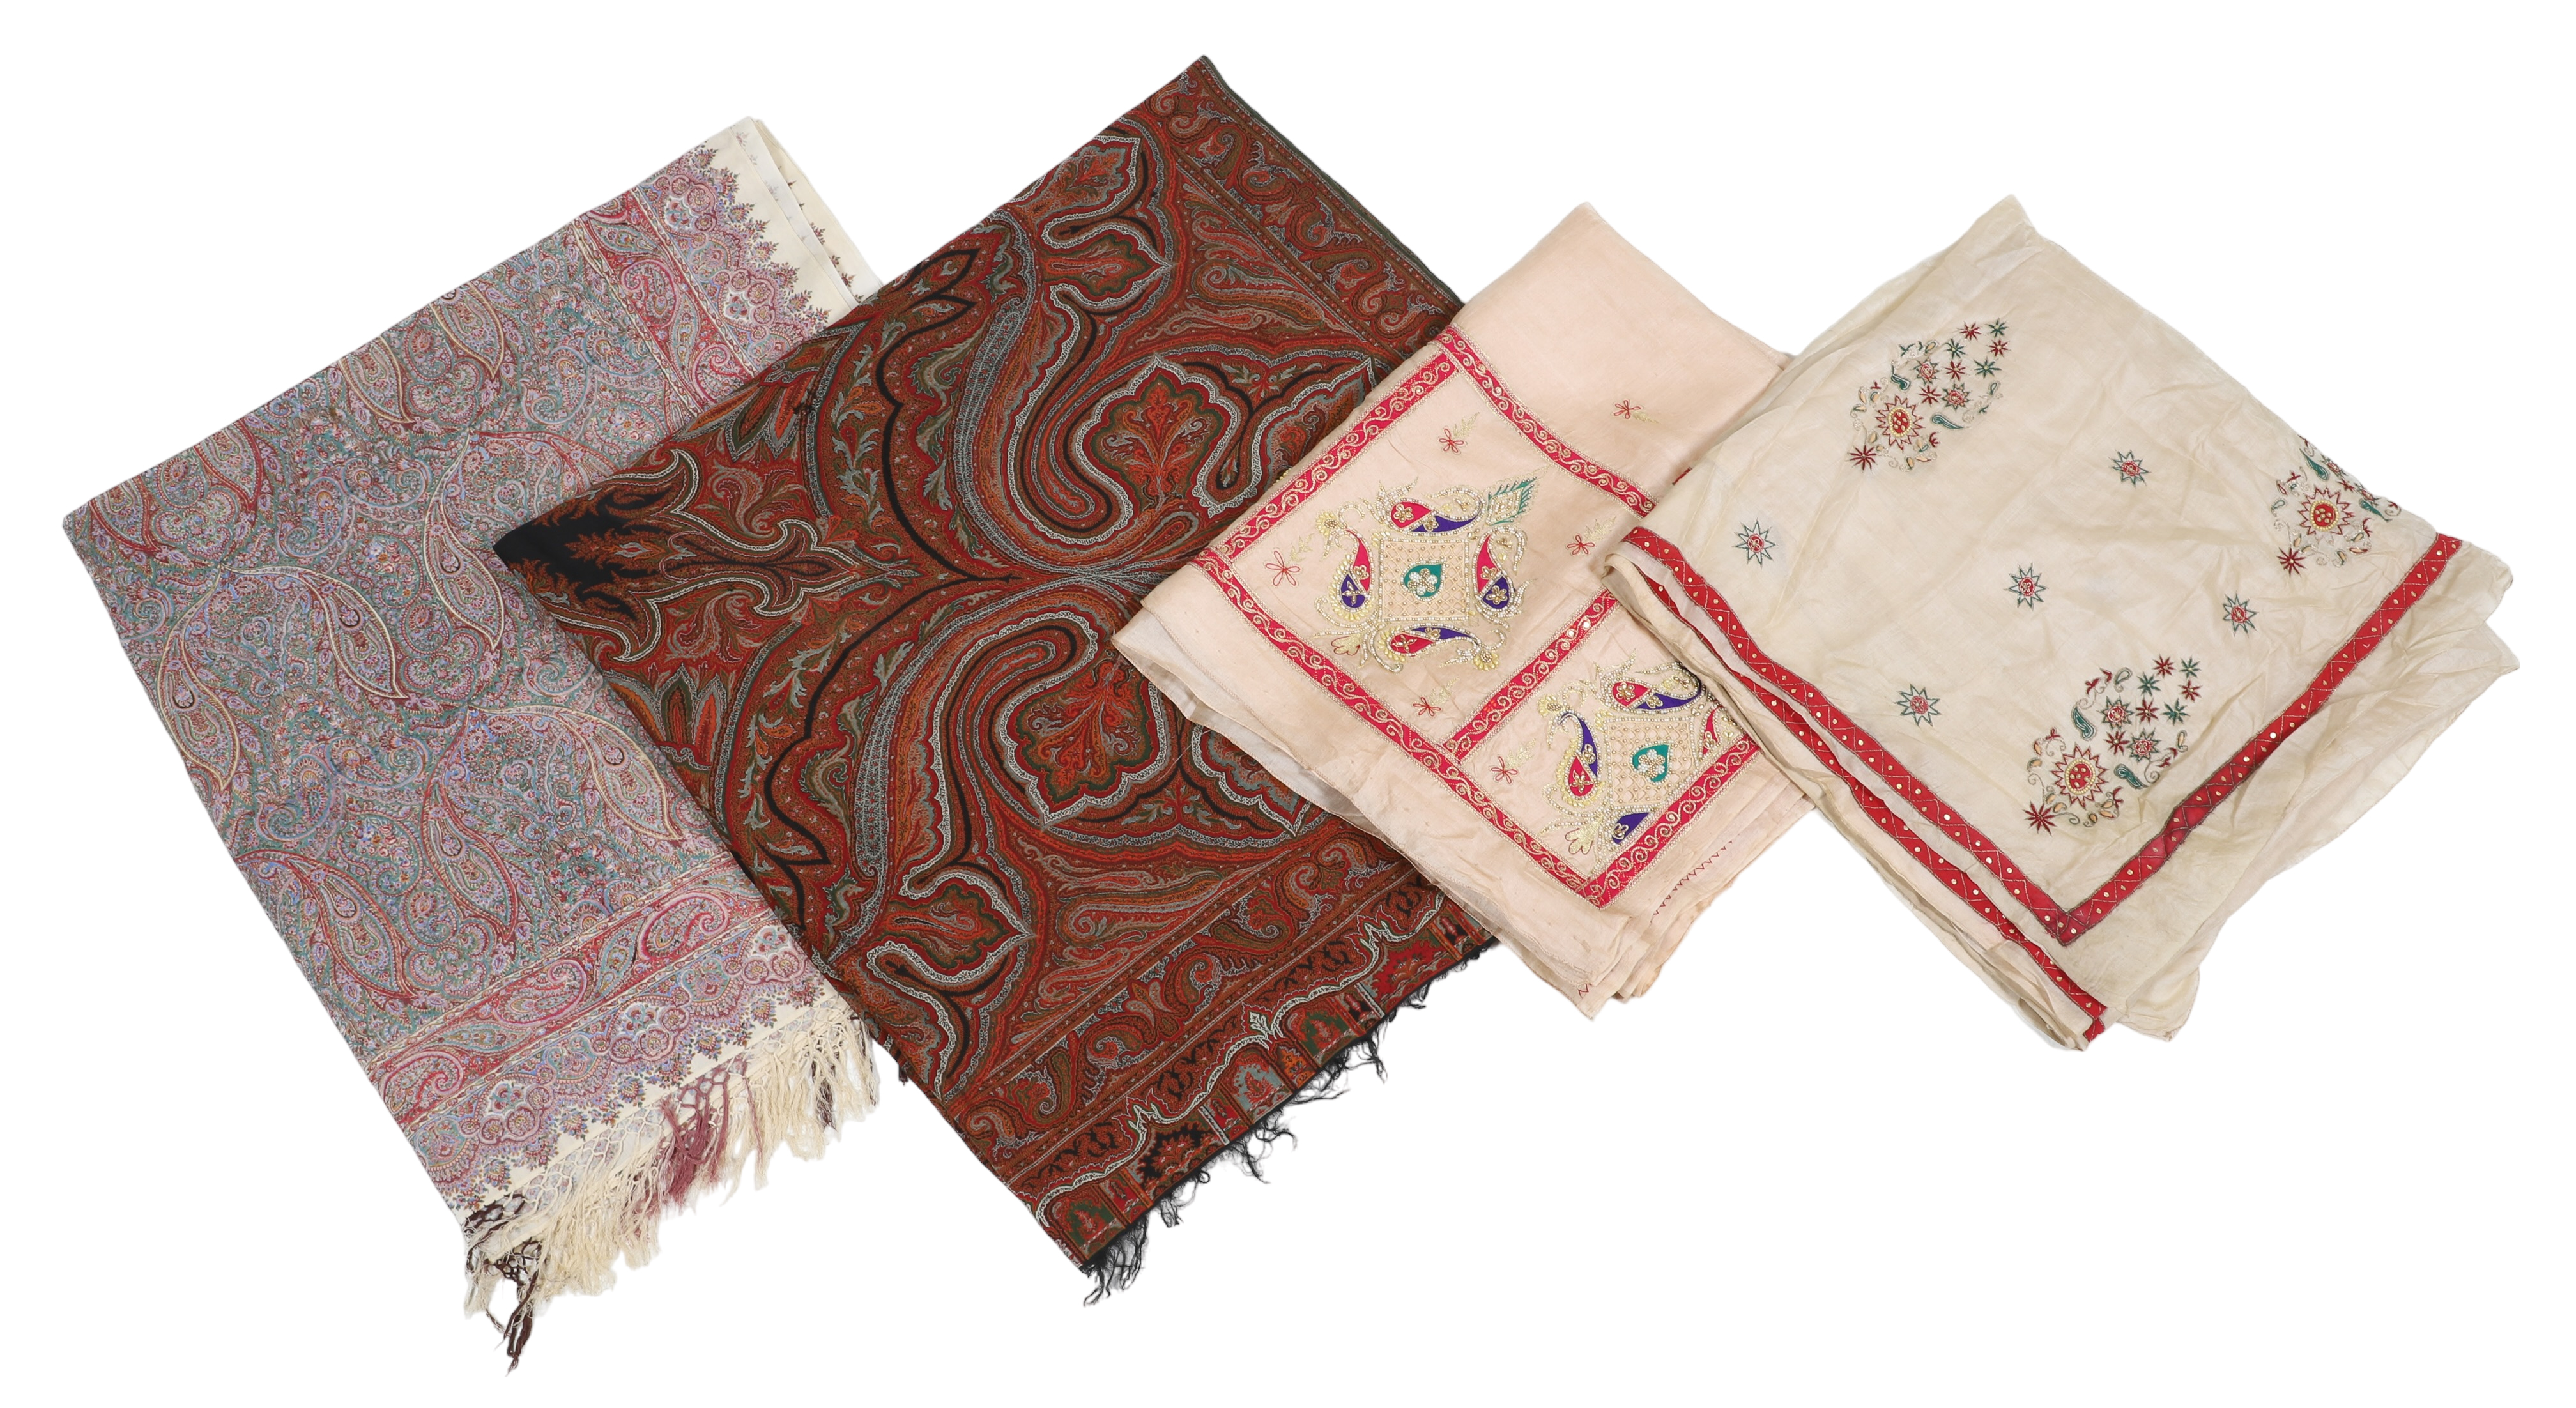  4 Silk Saris and Paisleys to 318020